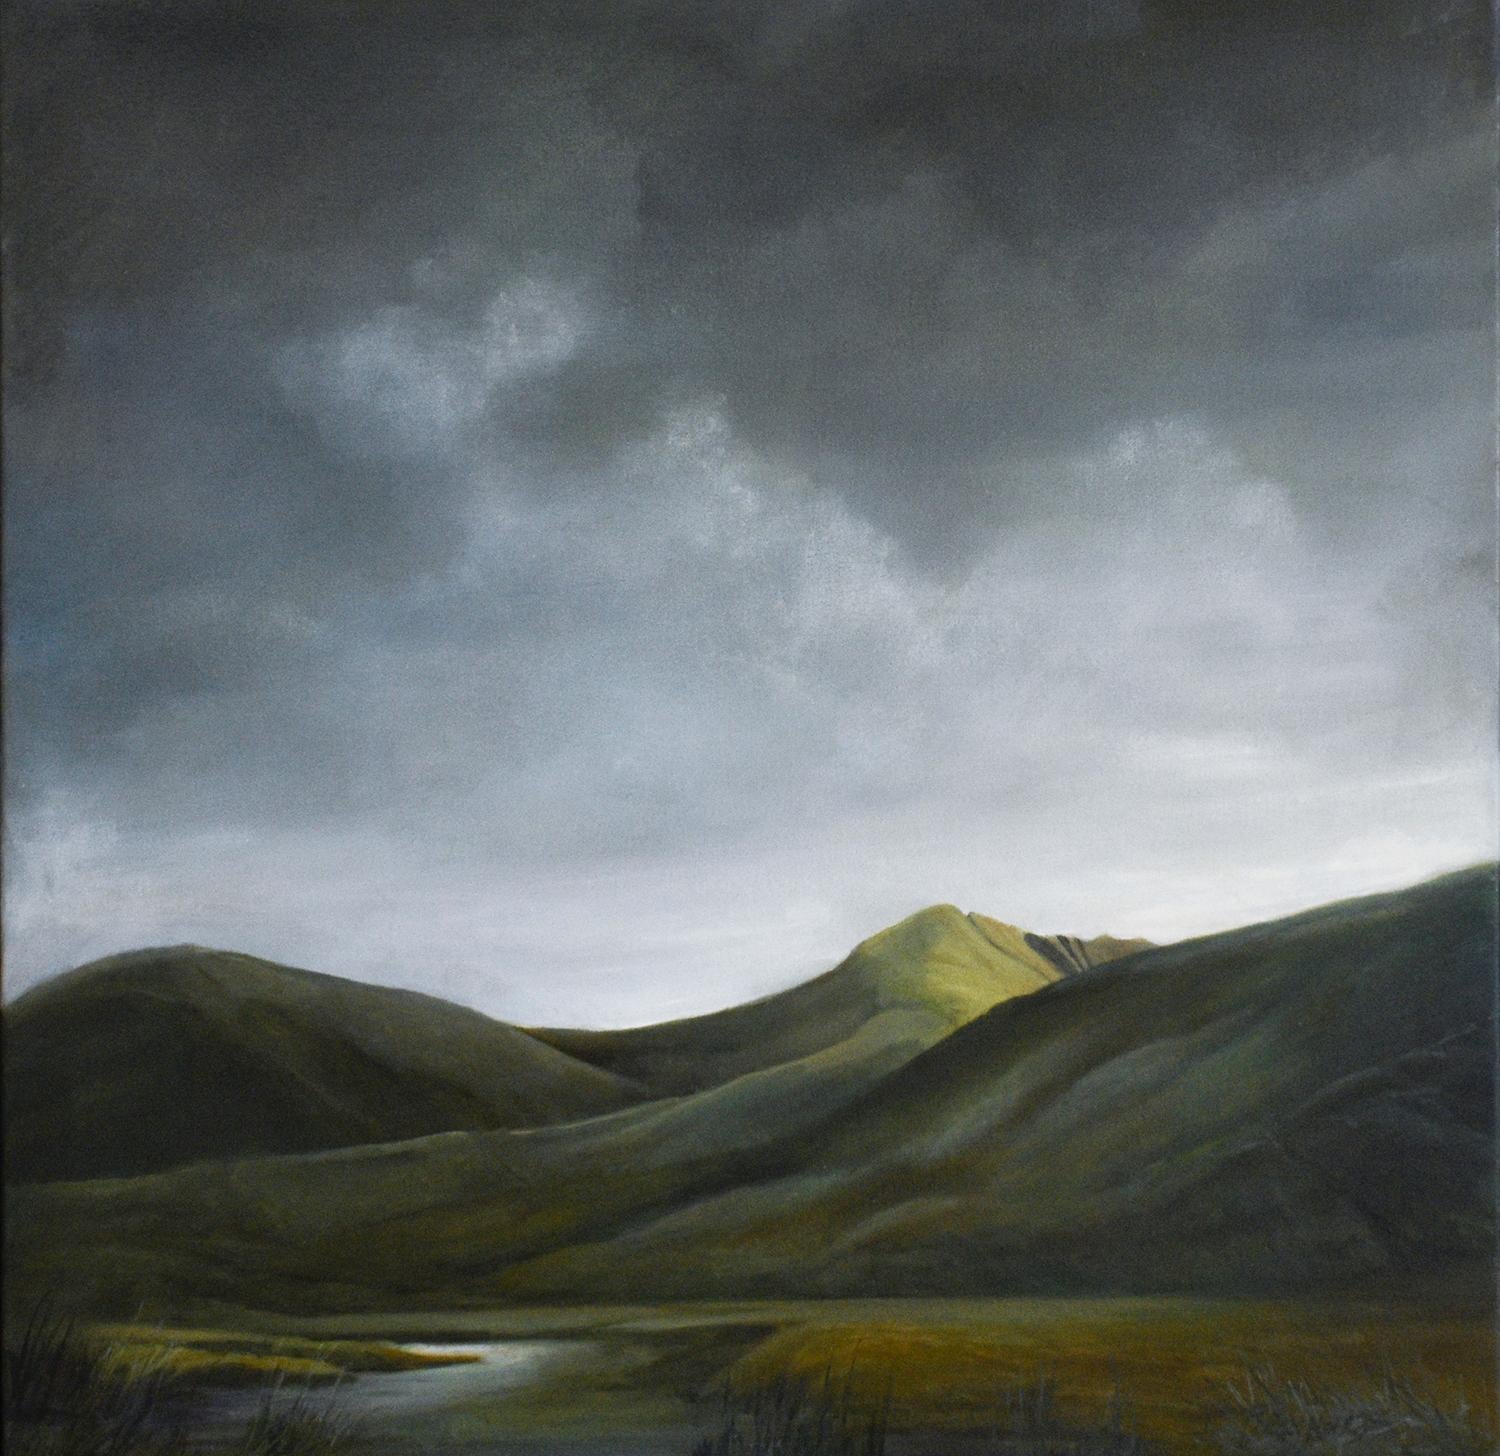 Scotland (Dramatic Landscape of Sunlit Hills Under a Clouded Sky)